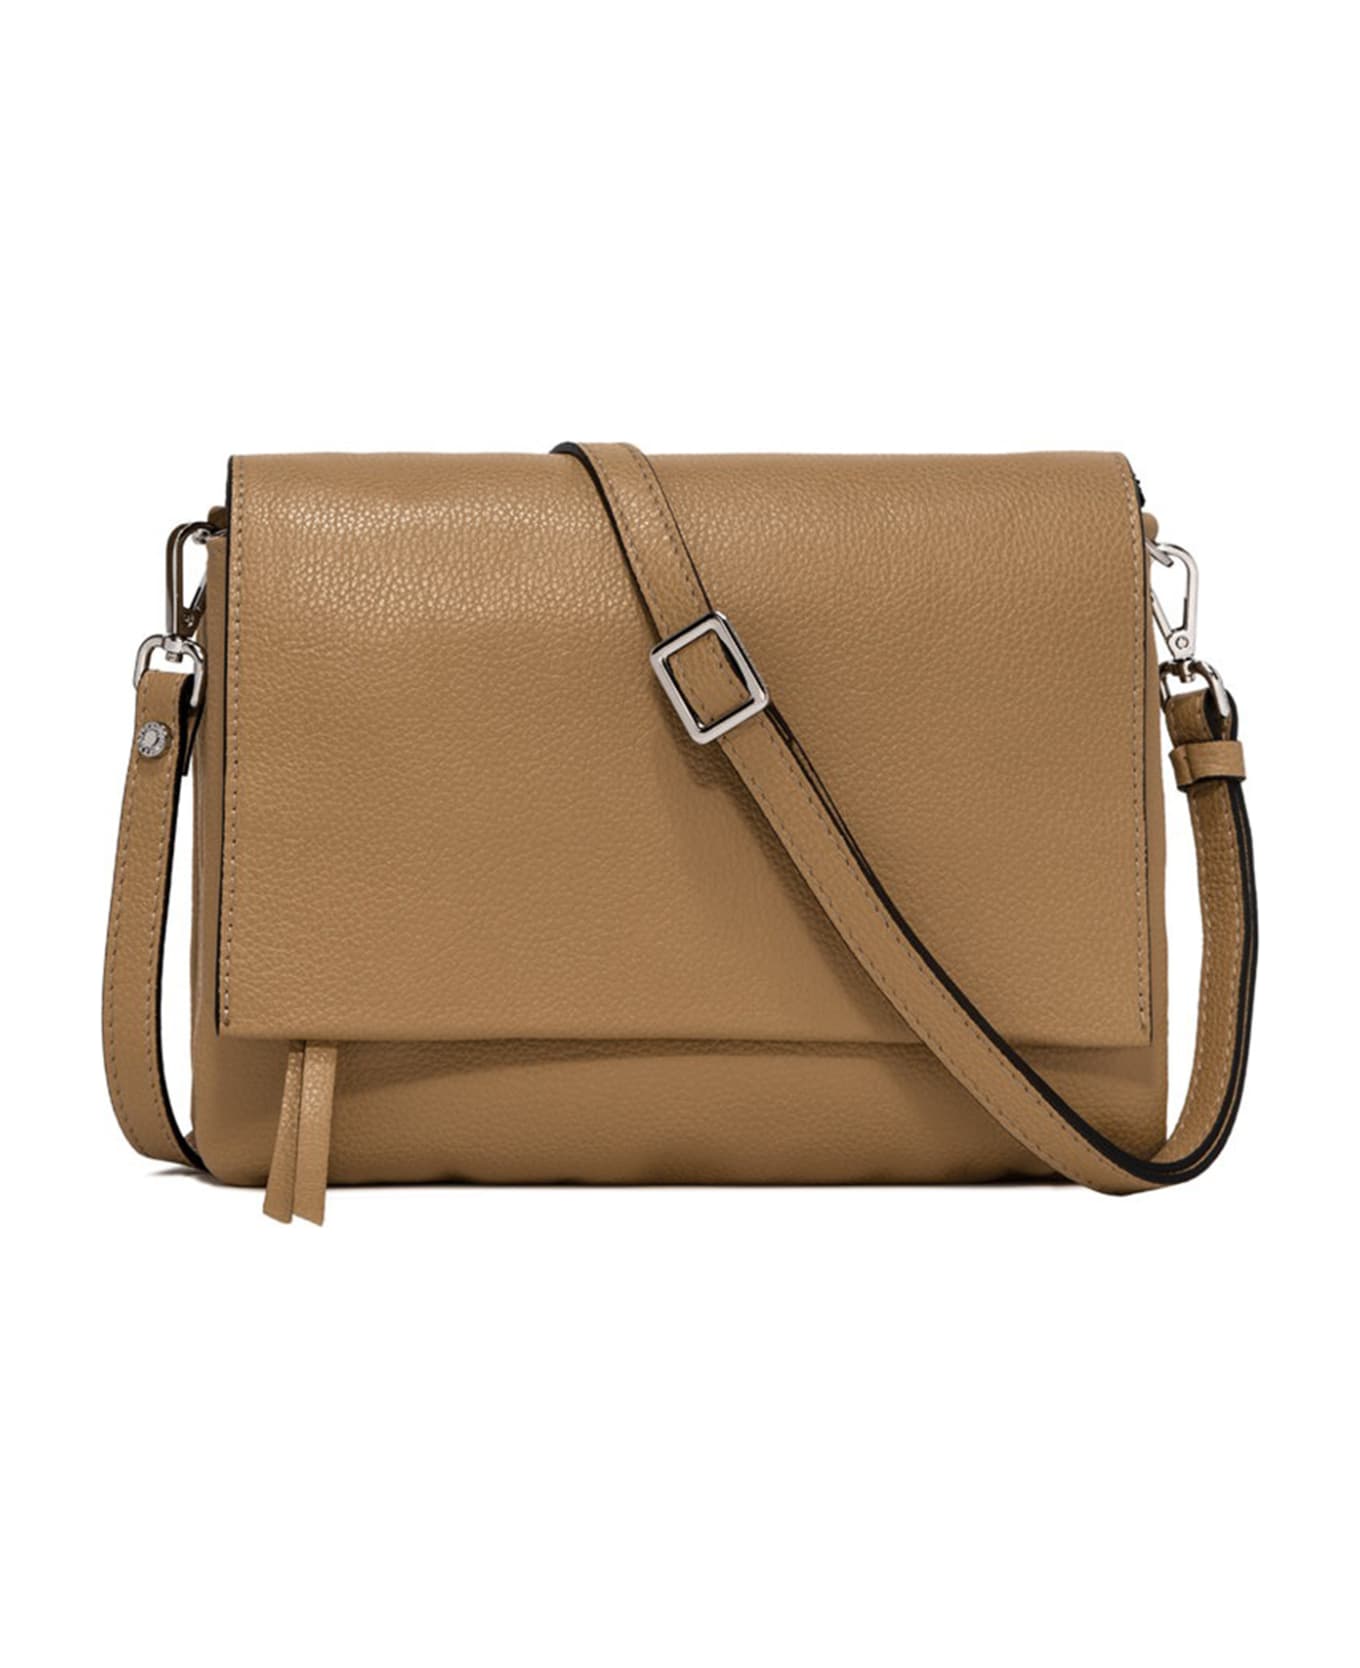 Gianni Chiarini Three Leather Shoulder Bag - NATURE